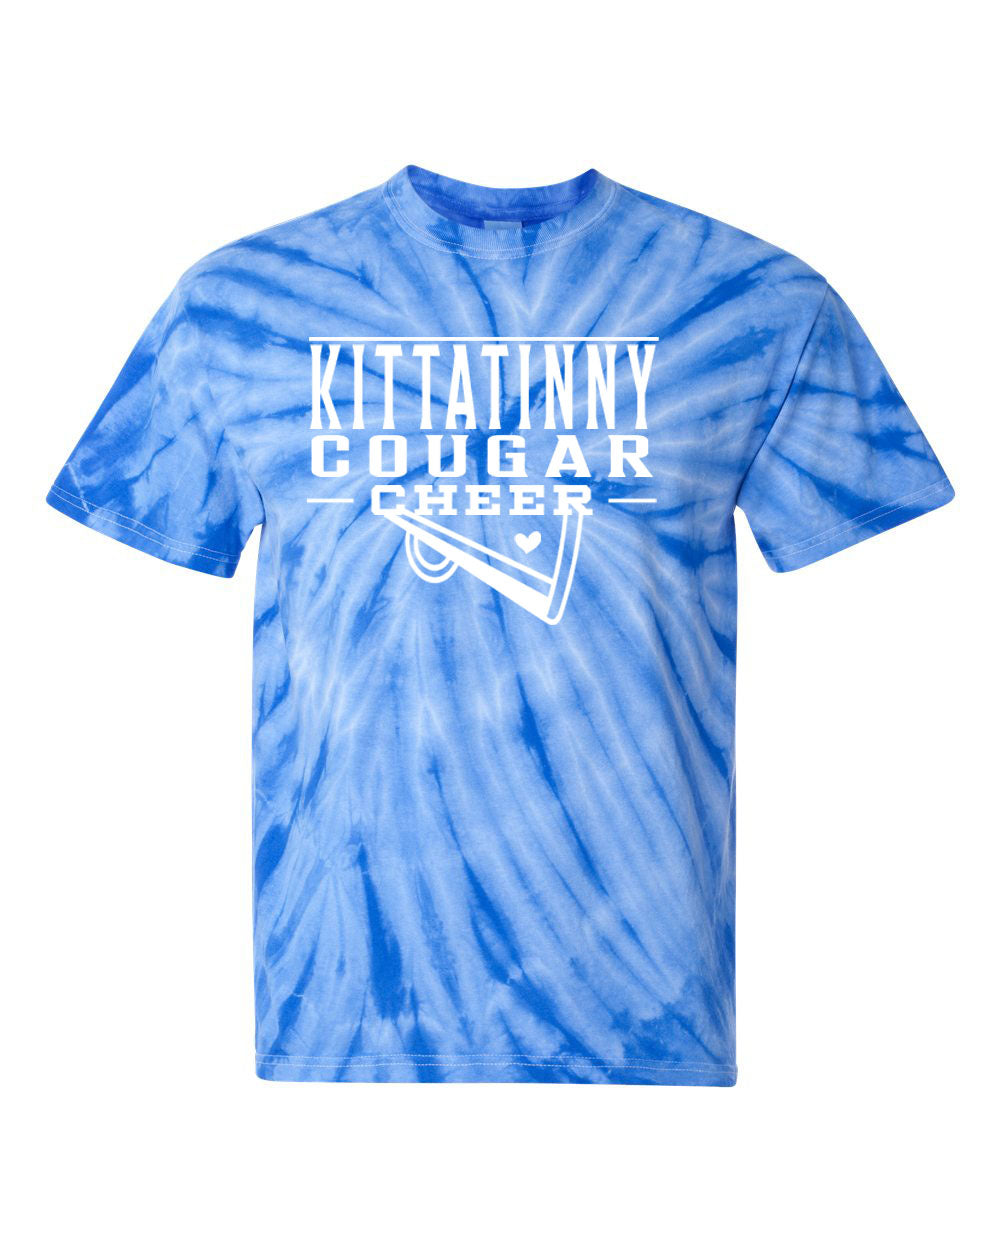 Kittatinny Cheer Tie Dye t-shirt Design 11